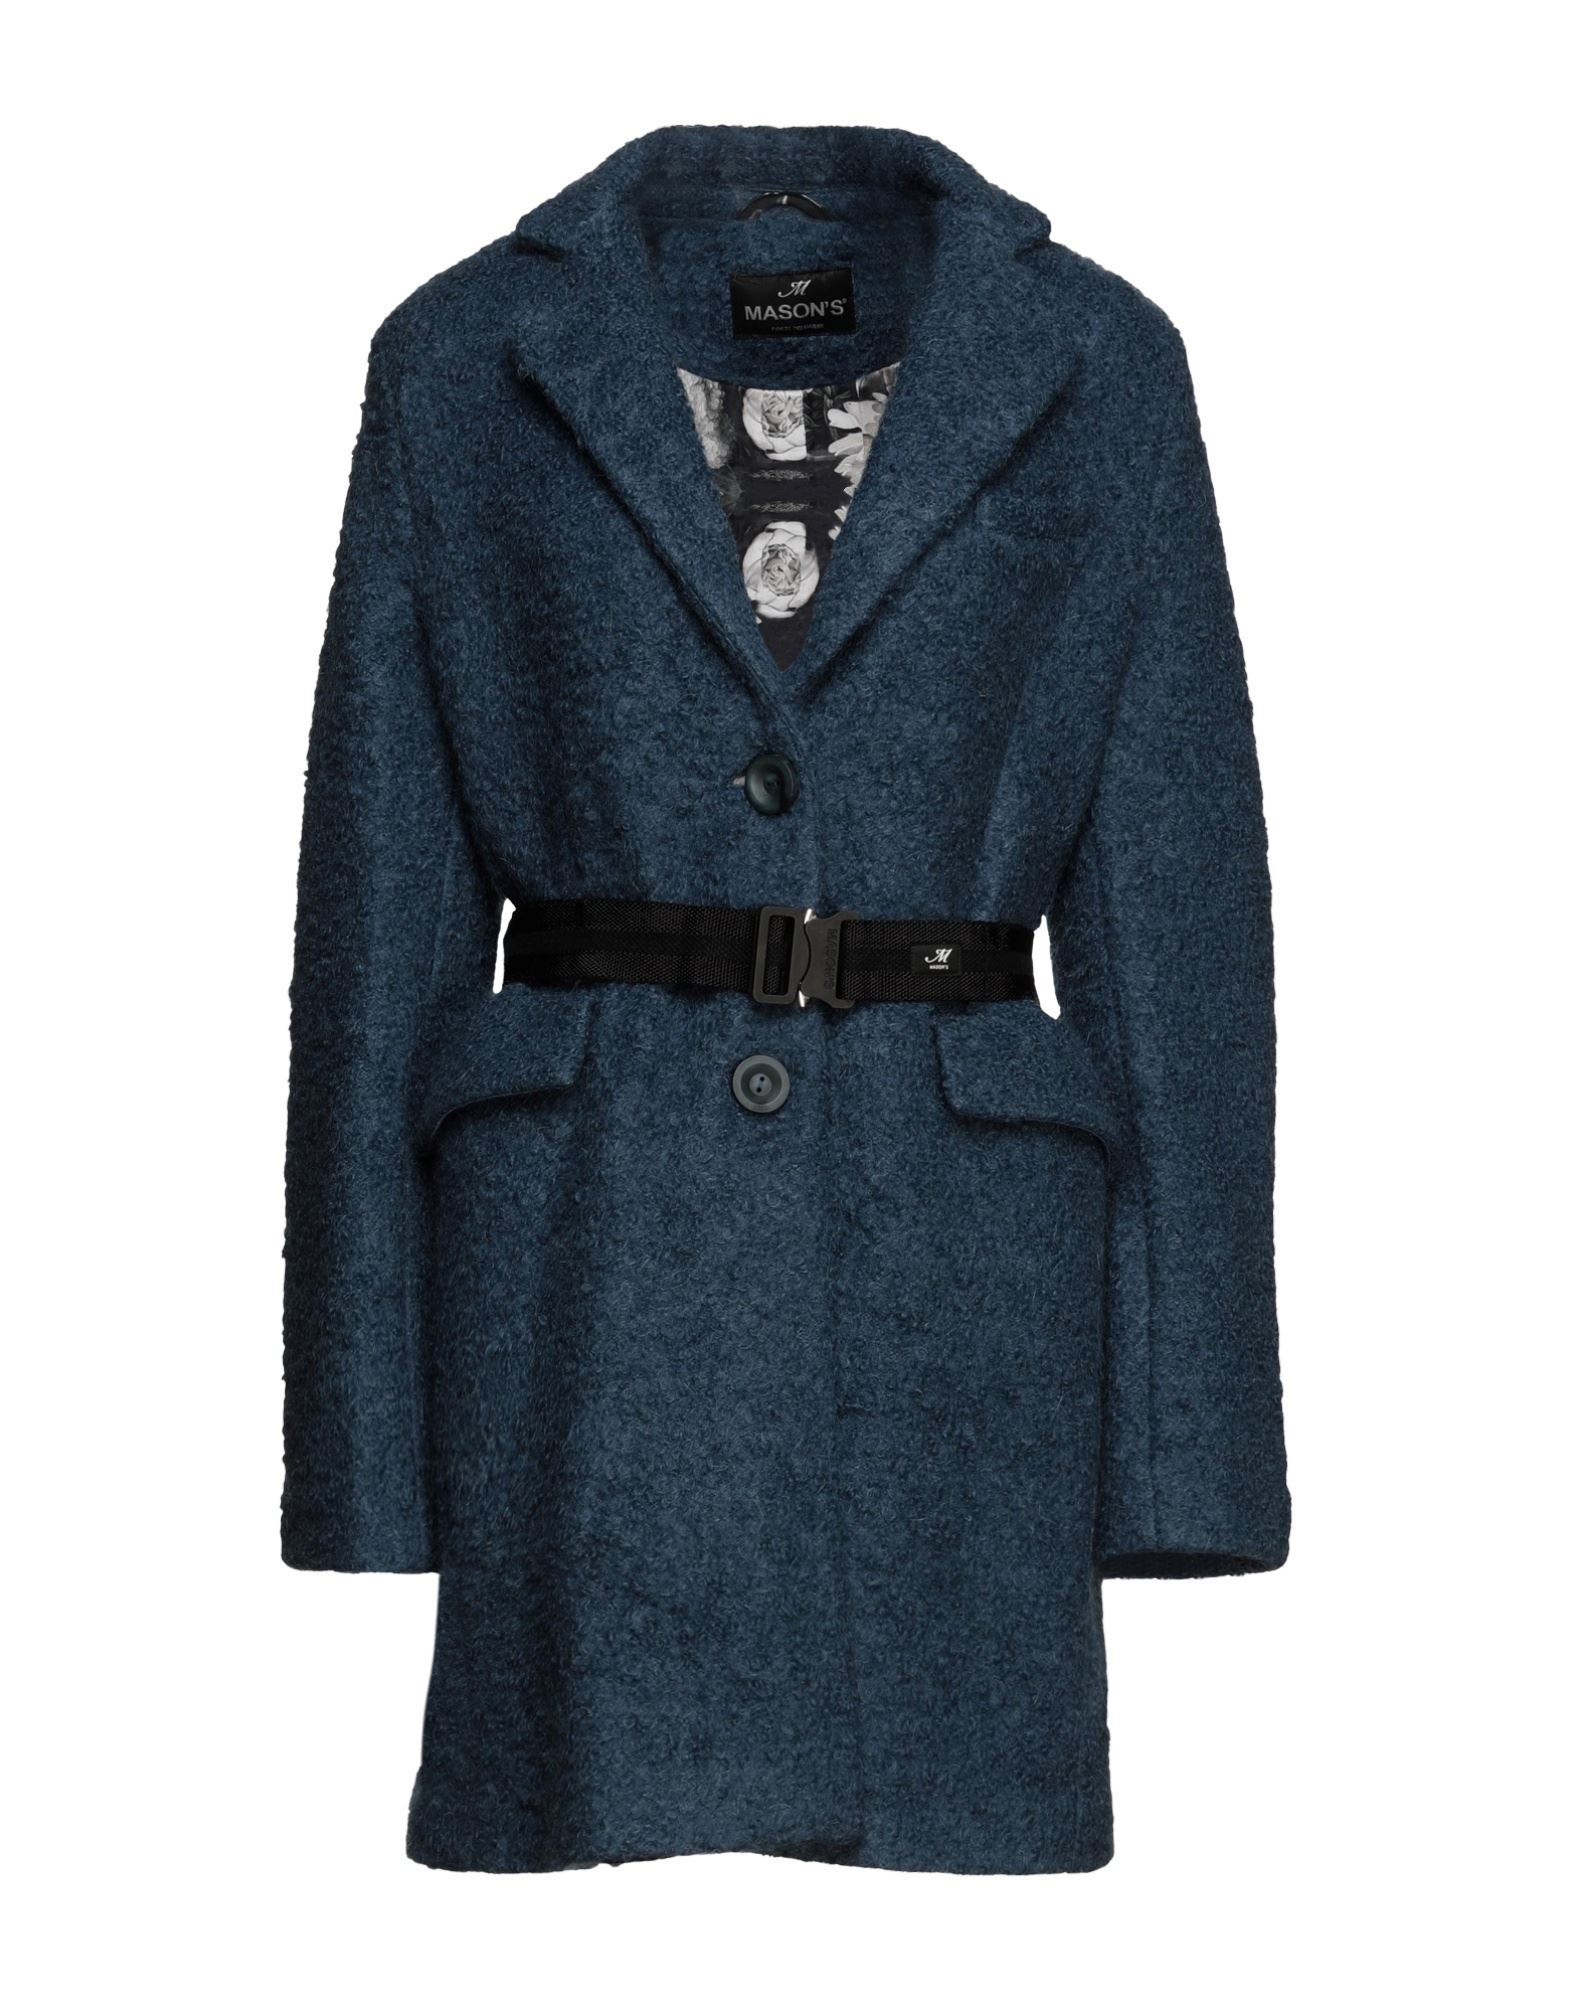 Mason's Coats In Slate Blue